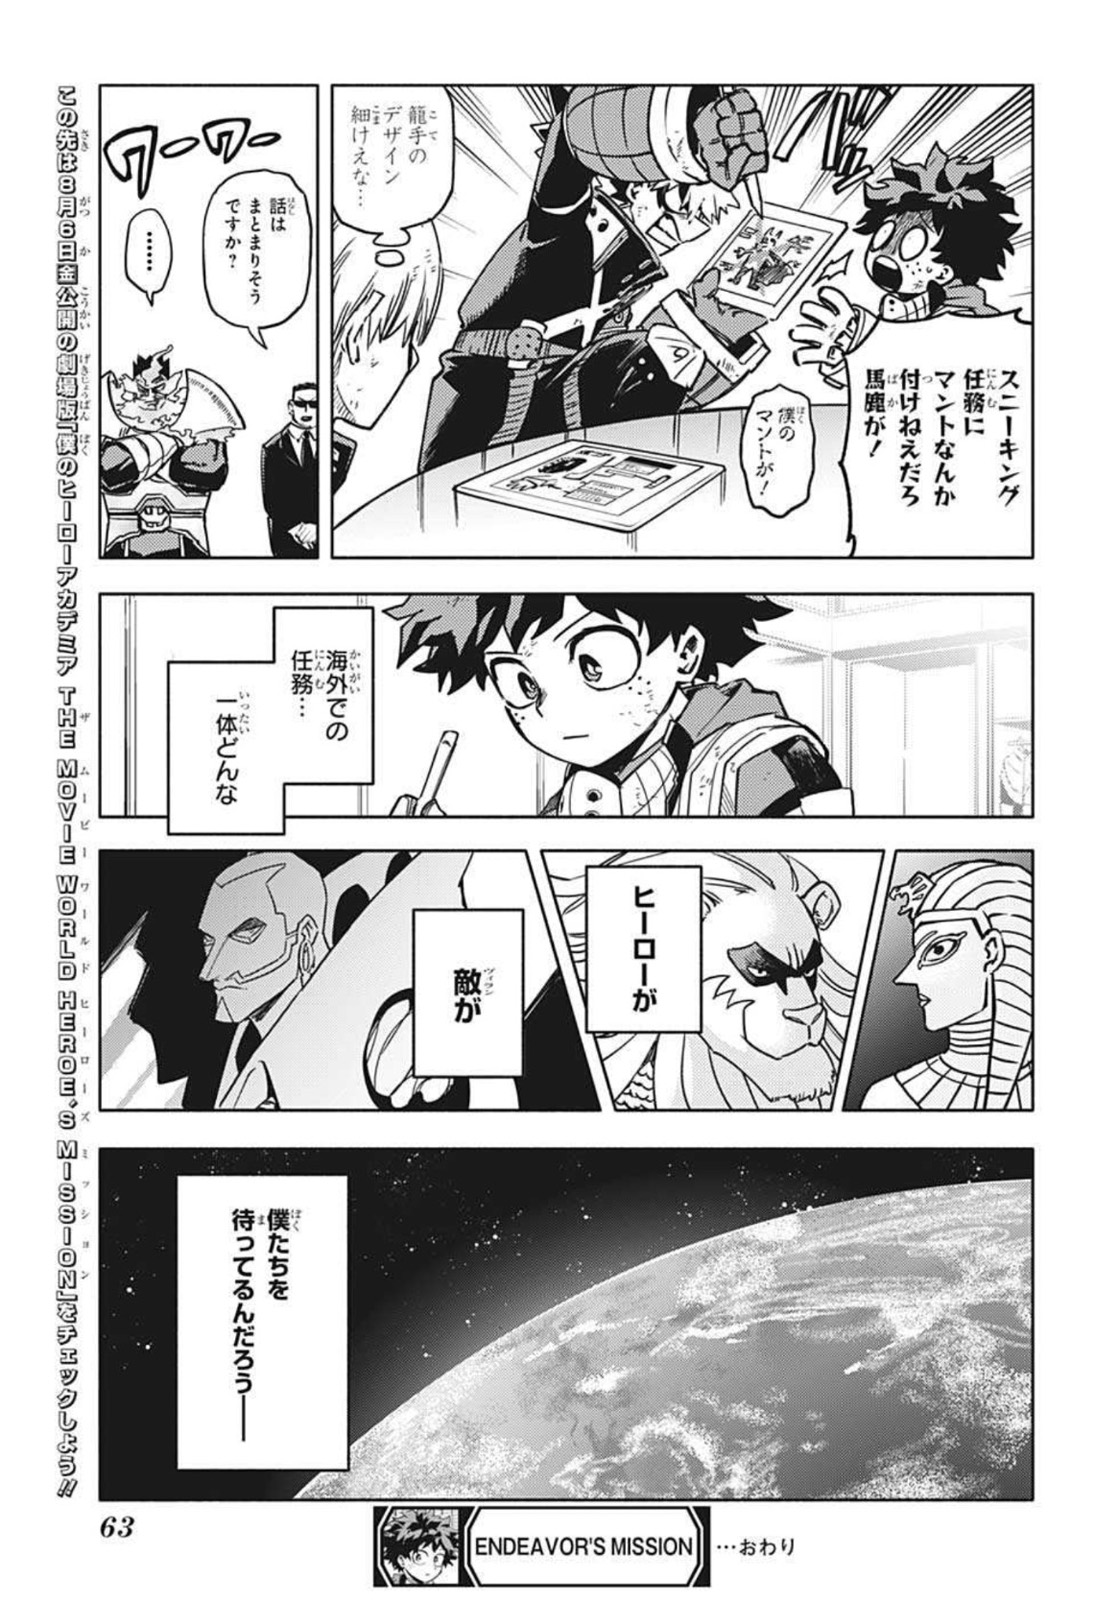 Boku no Hero Academia - Chapter 321.5 - Page 17